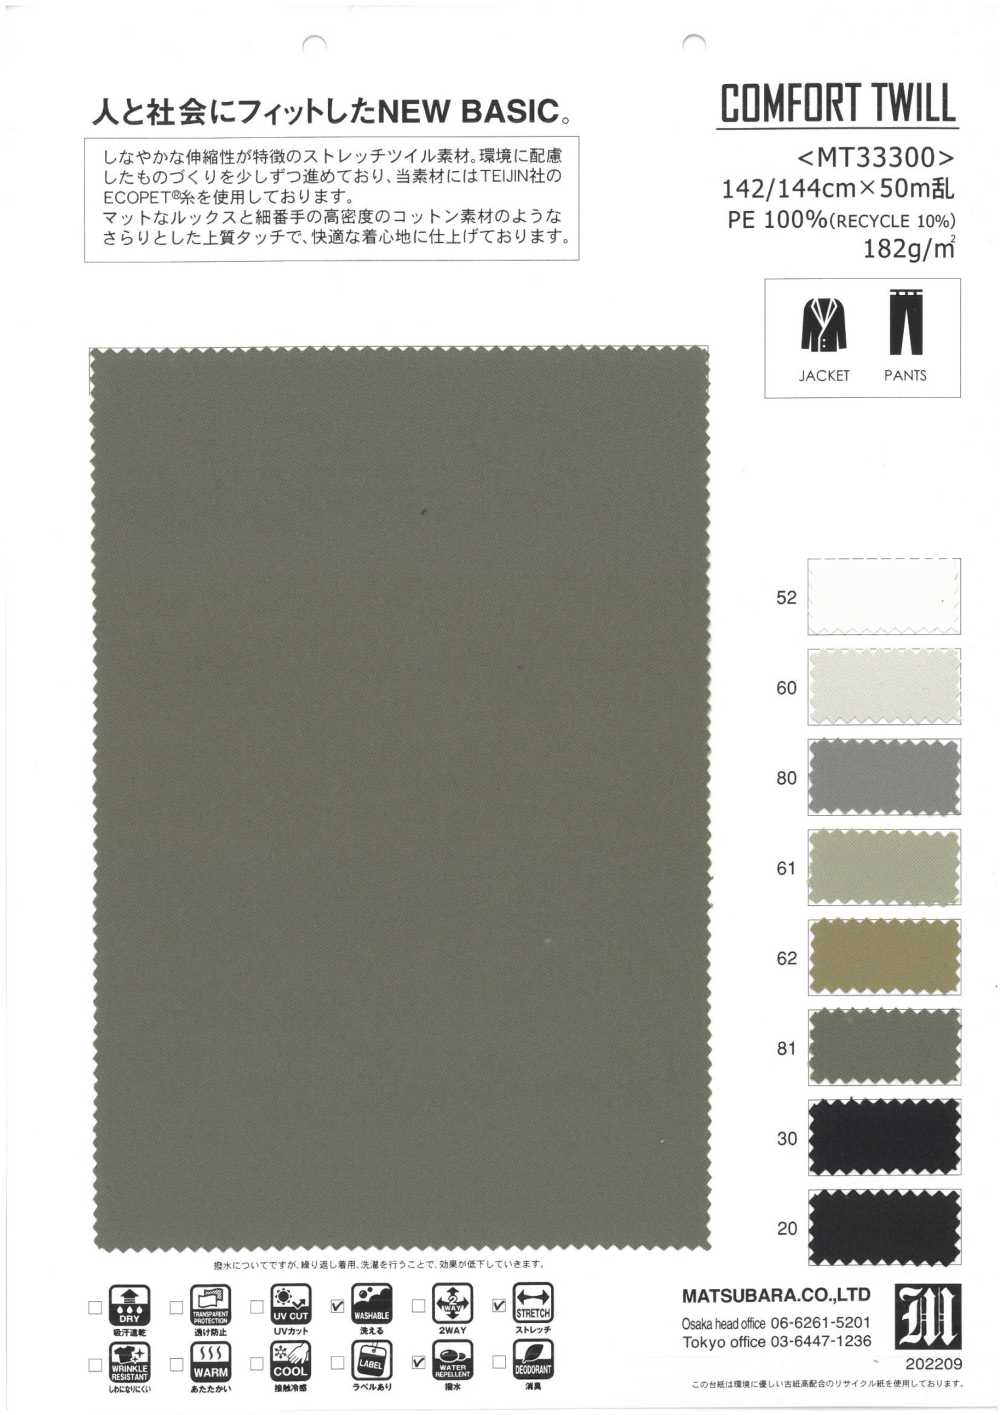 MT33300 SERGÉ CONFORT[Fabrication De Textile] Matsubara